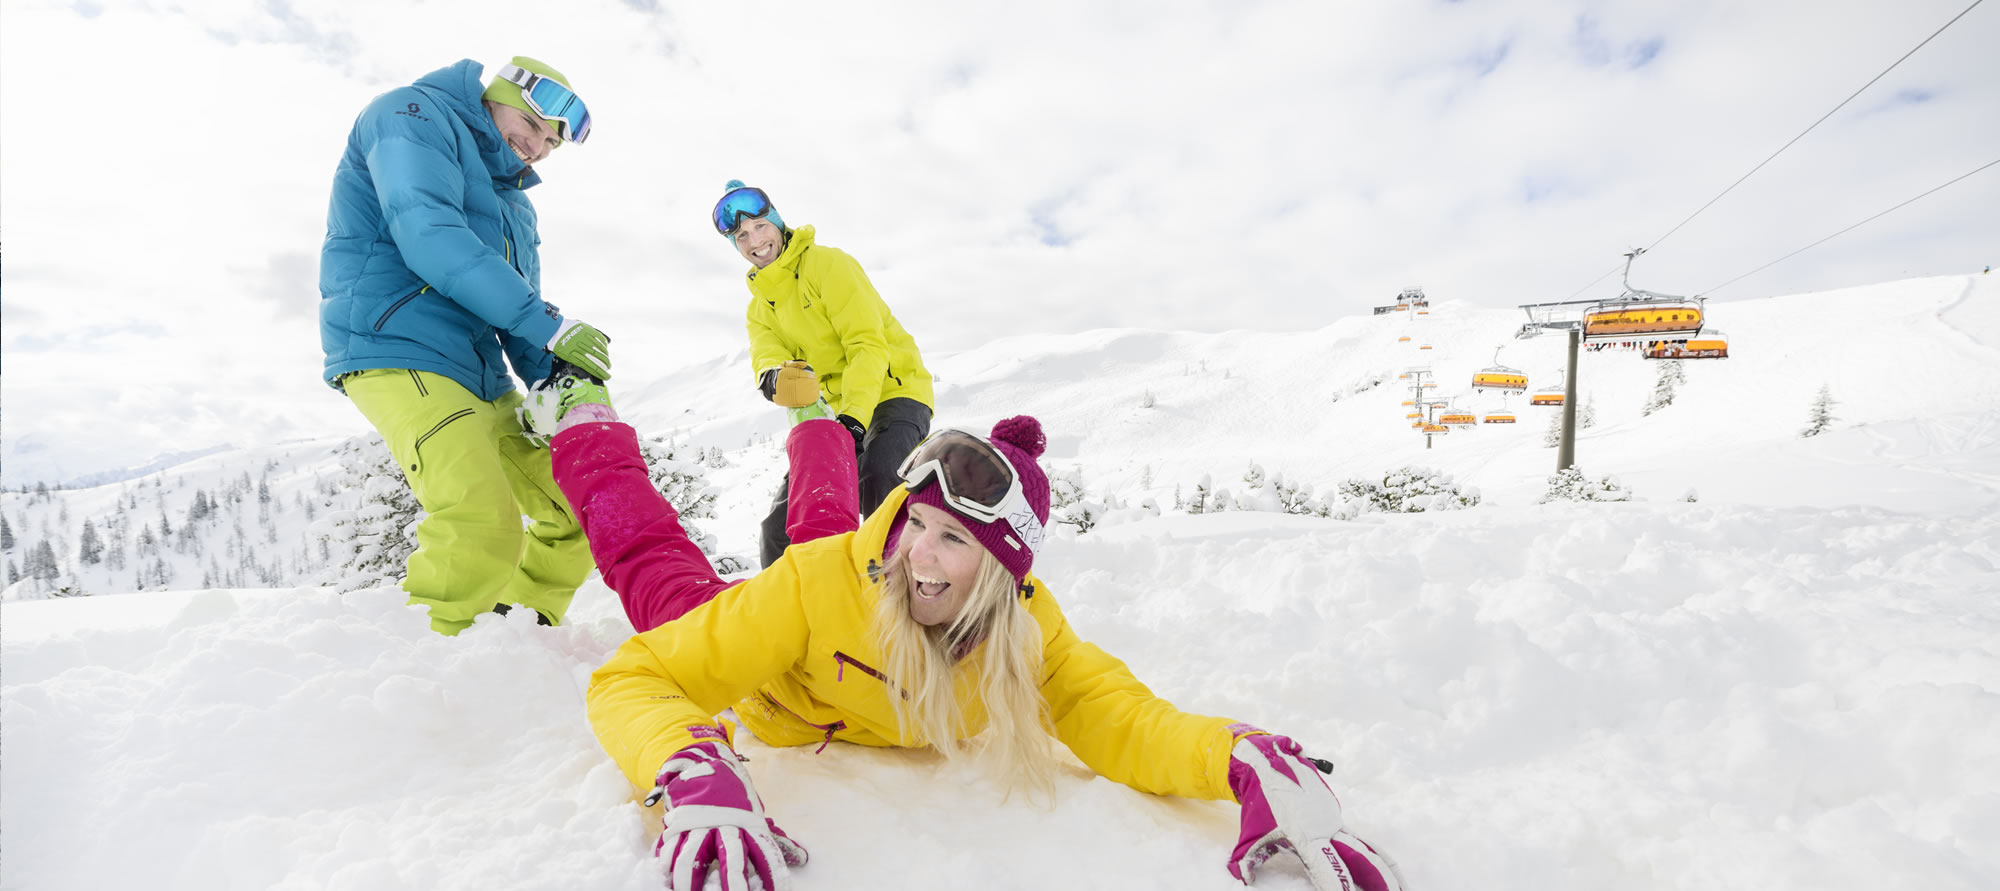 Winter sports besides skiing in Flachau